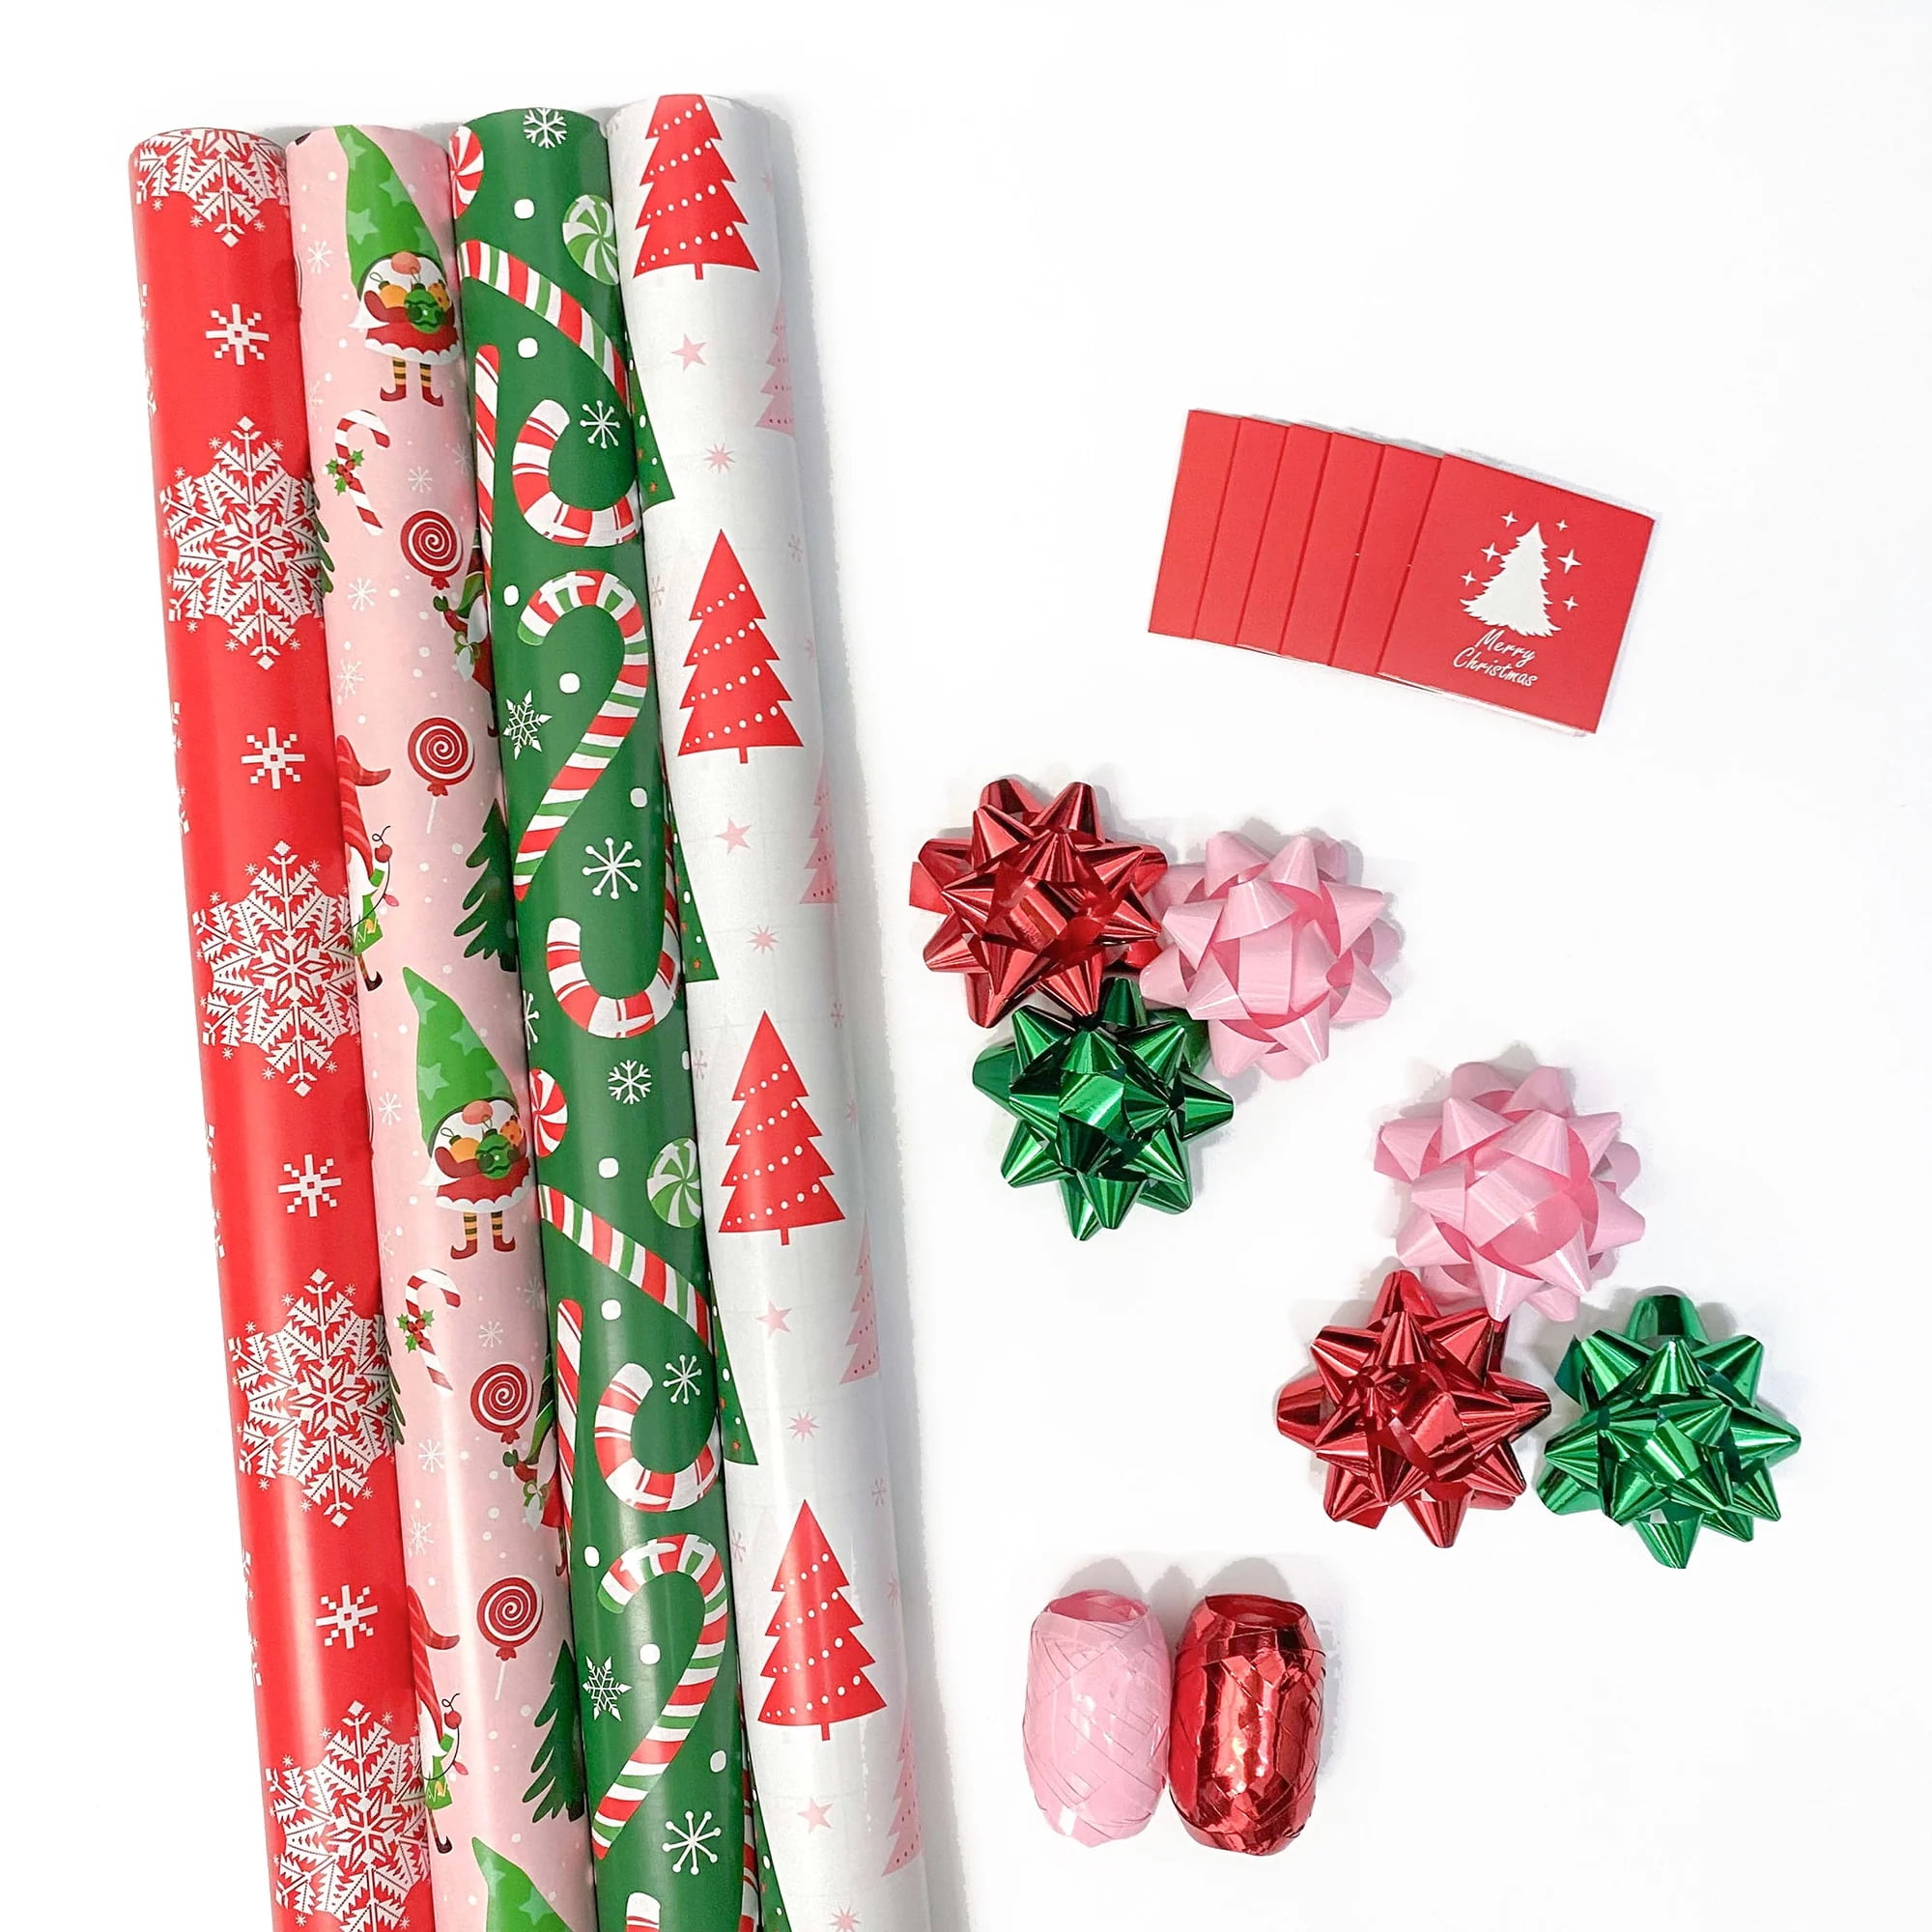 Wholesale 40sqft Christmas Gift Wrap - Asst